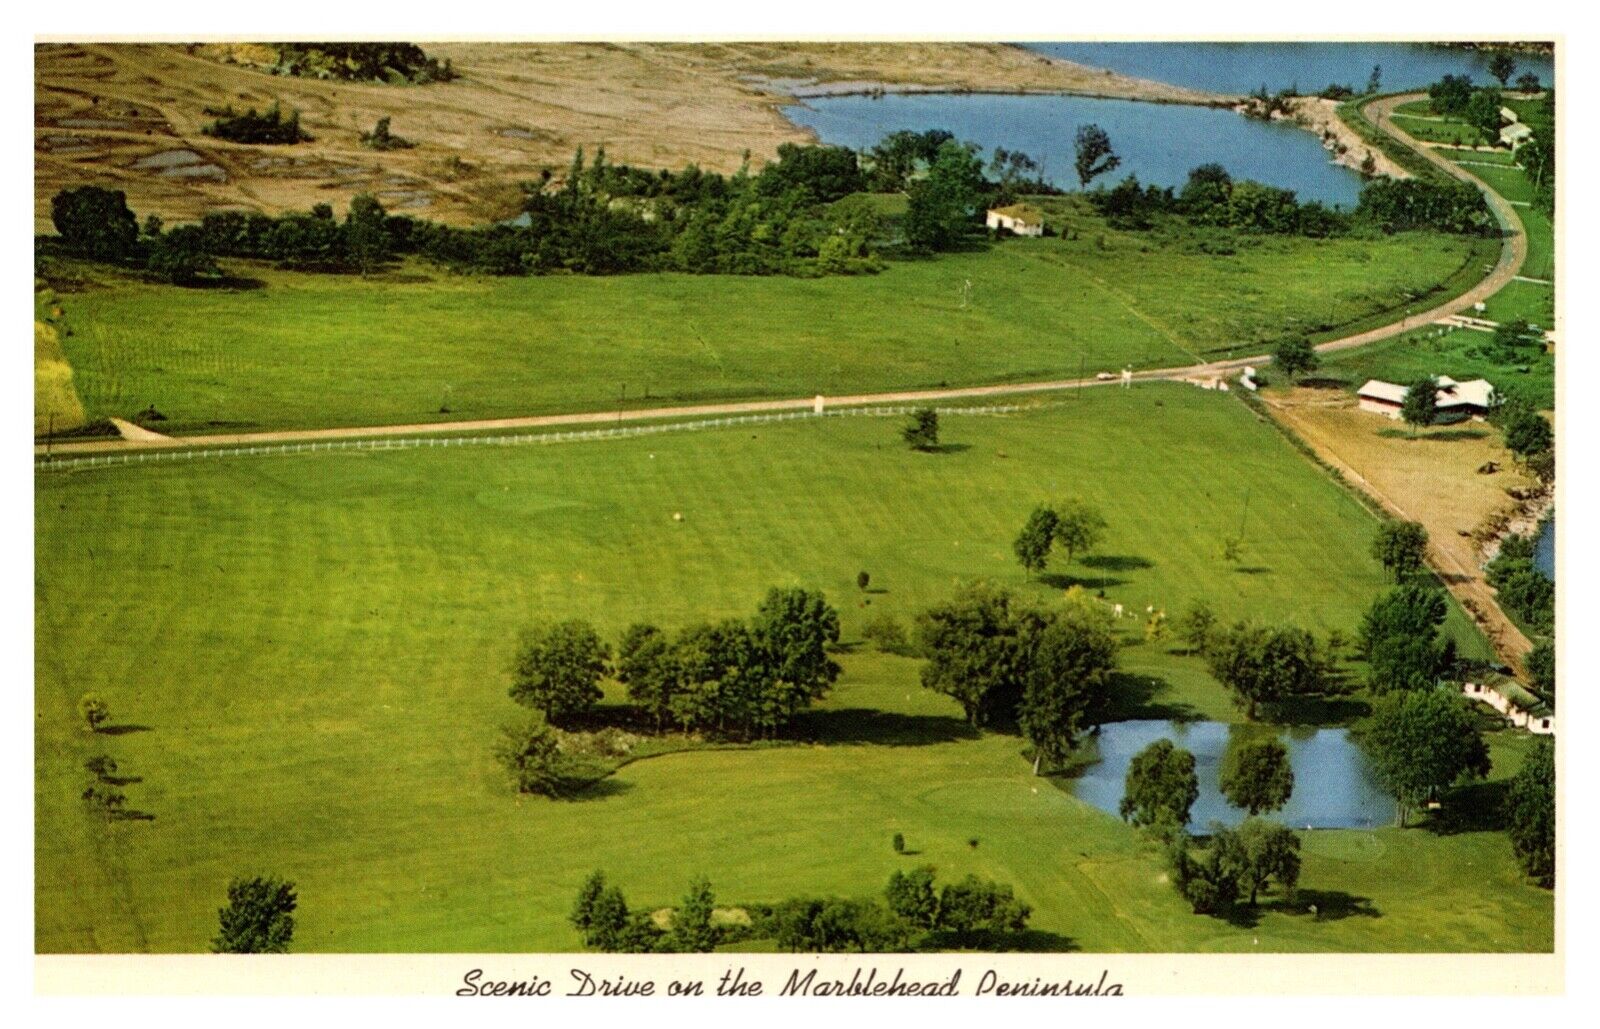 Marblehead Peninsula OH Ohio Scenic Drive Bay Shore Lake Erie Chrome Postcard